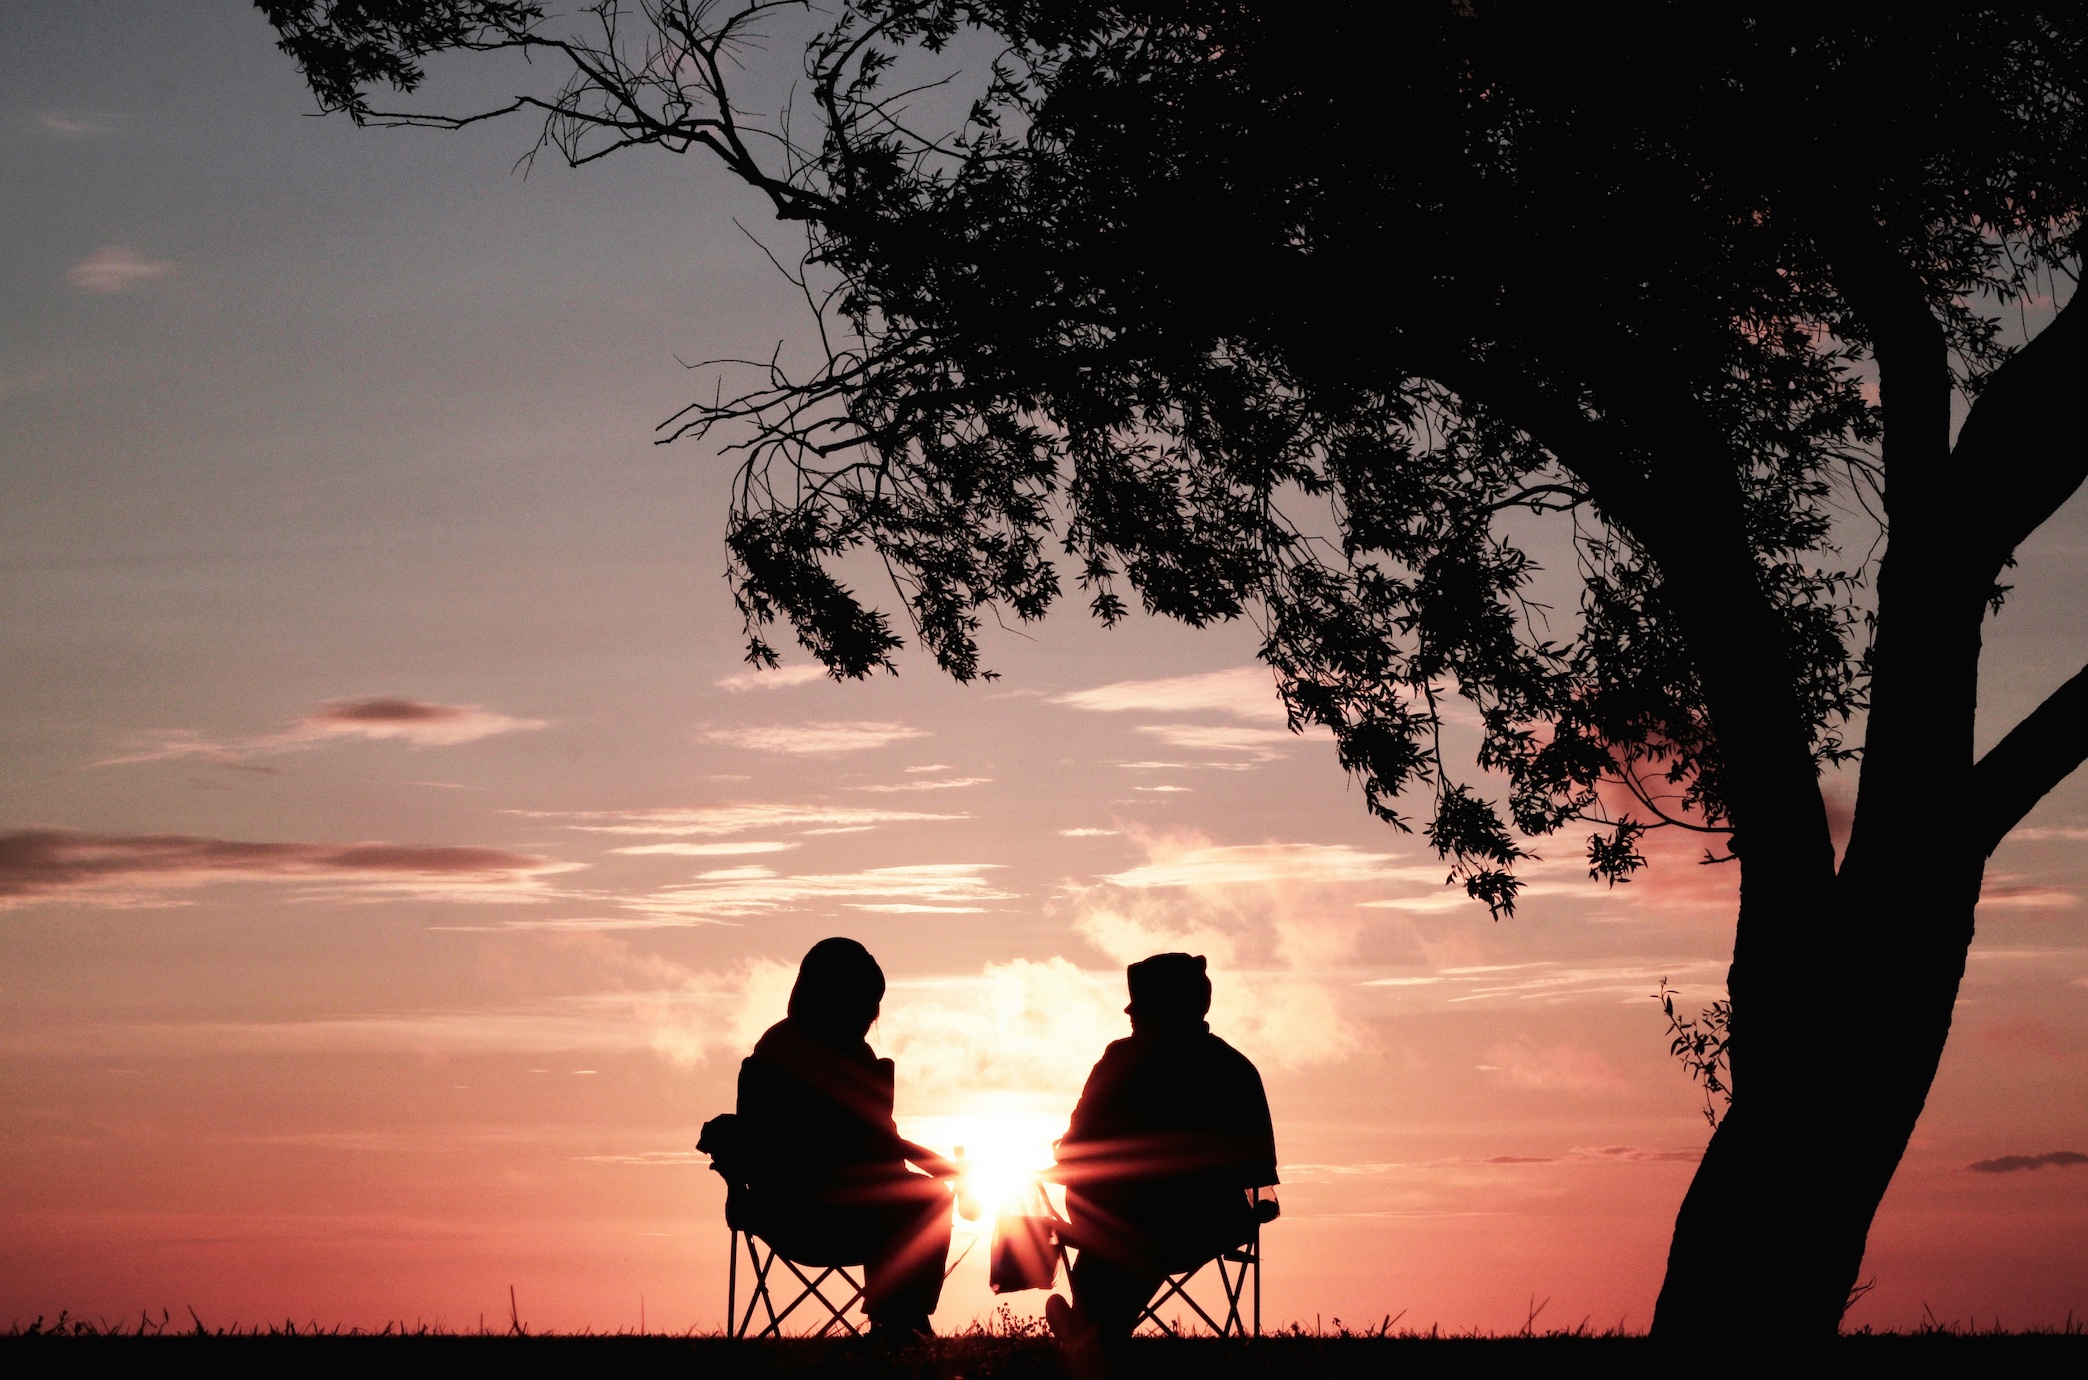 Older couple watching sunset; image by Harli Marten, via Unsplash.com.